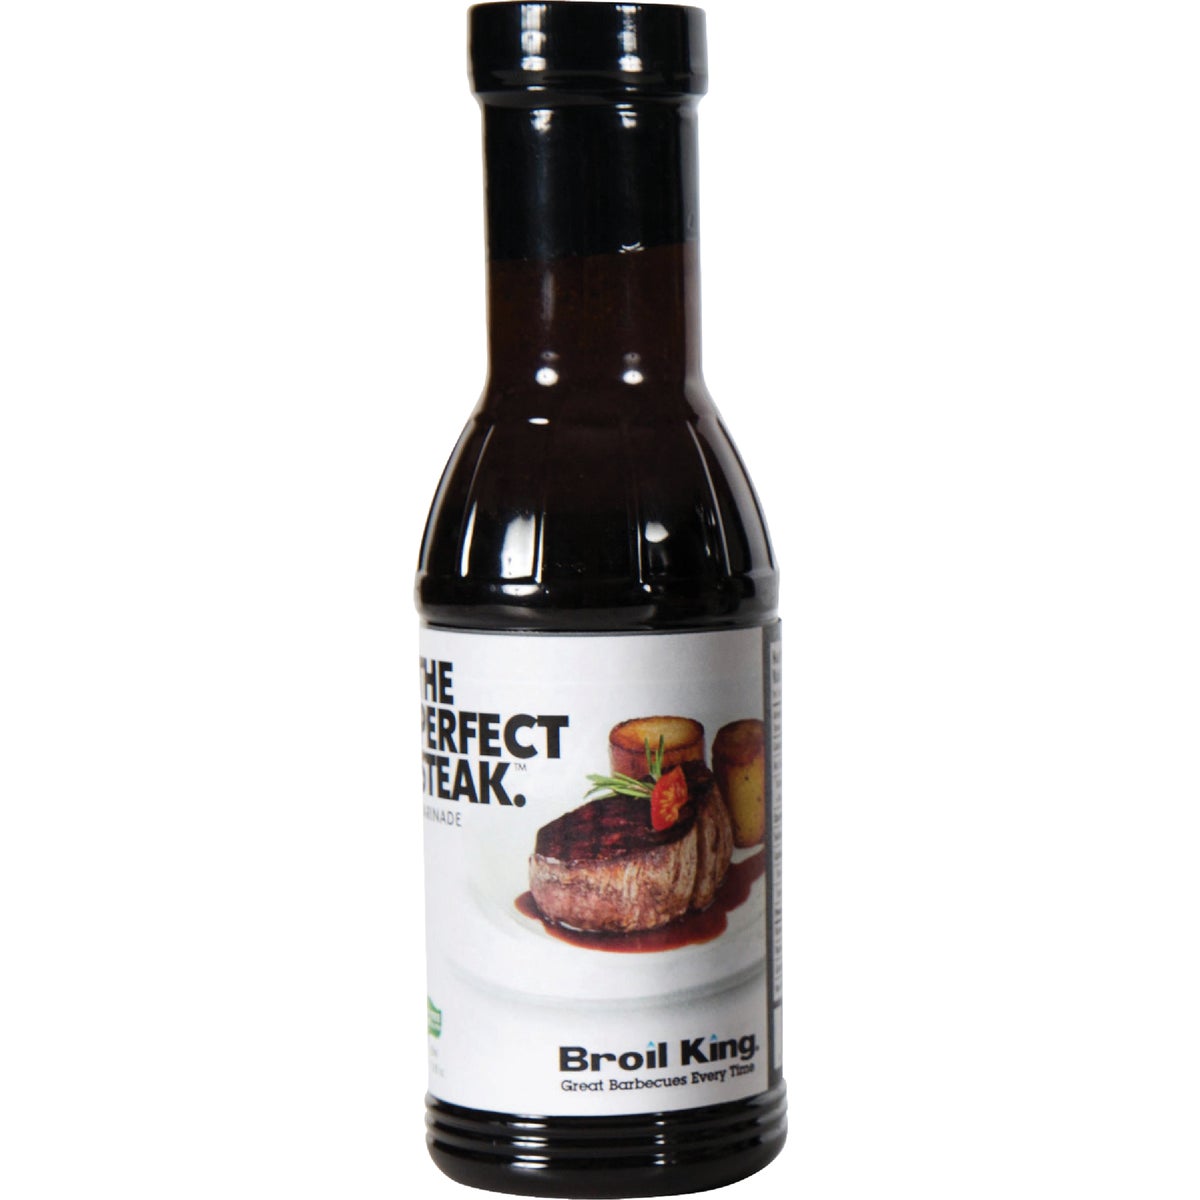 Item 801362, Perfect Steak marinade is a blend of balsamic vinegar, white vinegar, olive